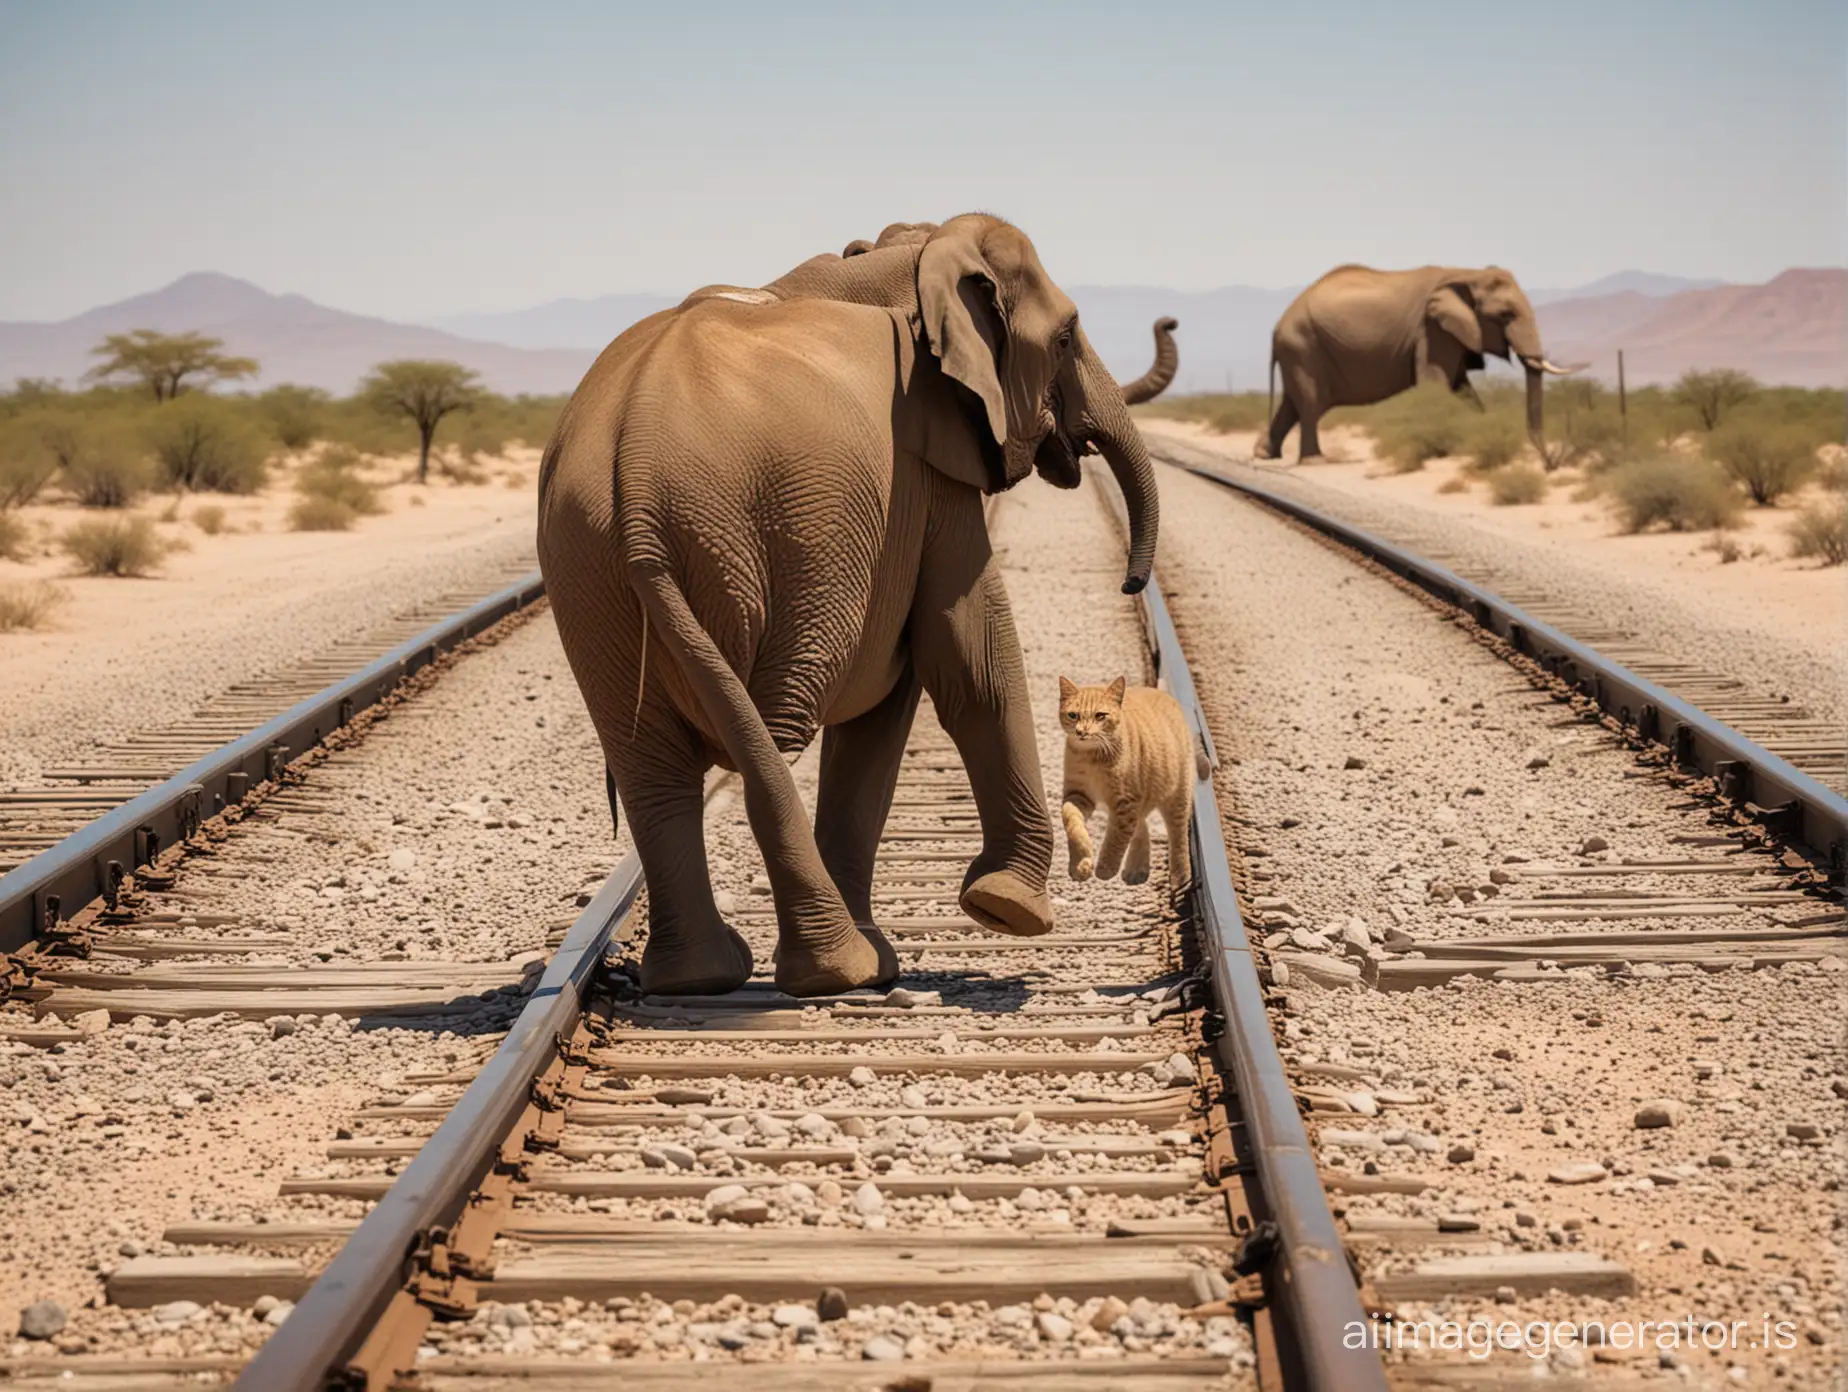 Playful-Cat-Chasing-Elephant-on-Railroad-Tracks-in-Desert-Landscape